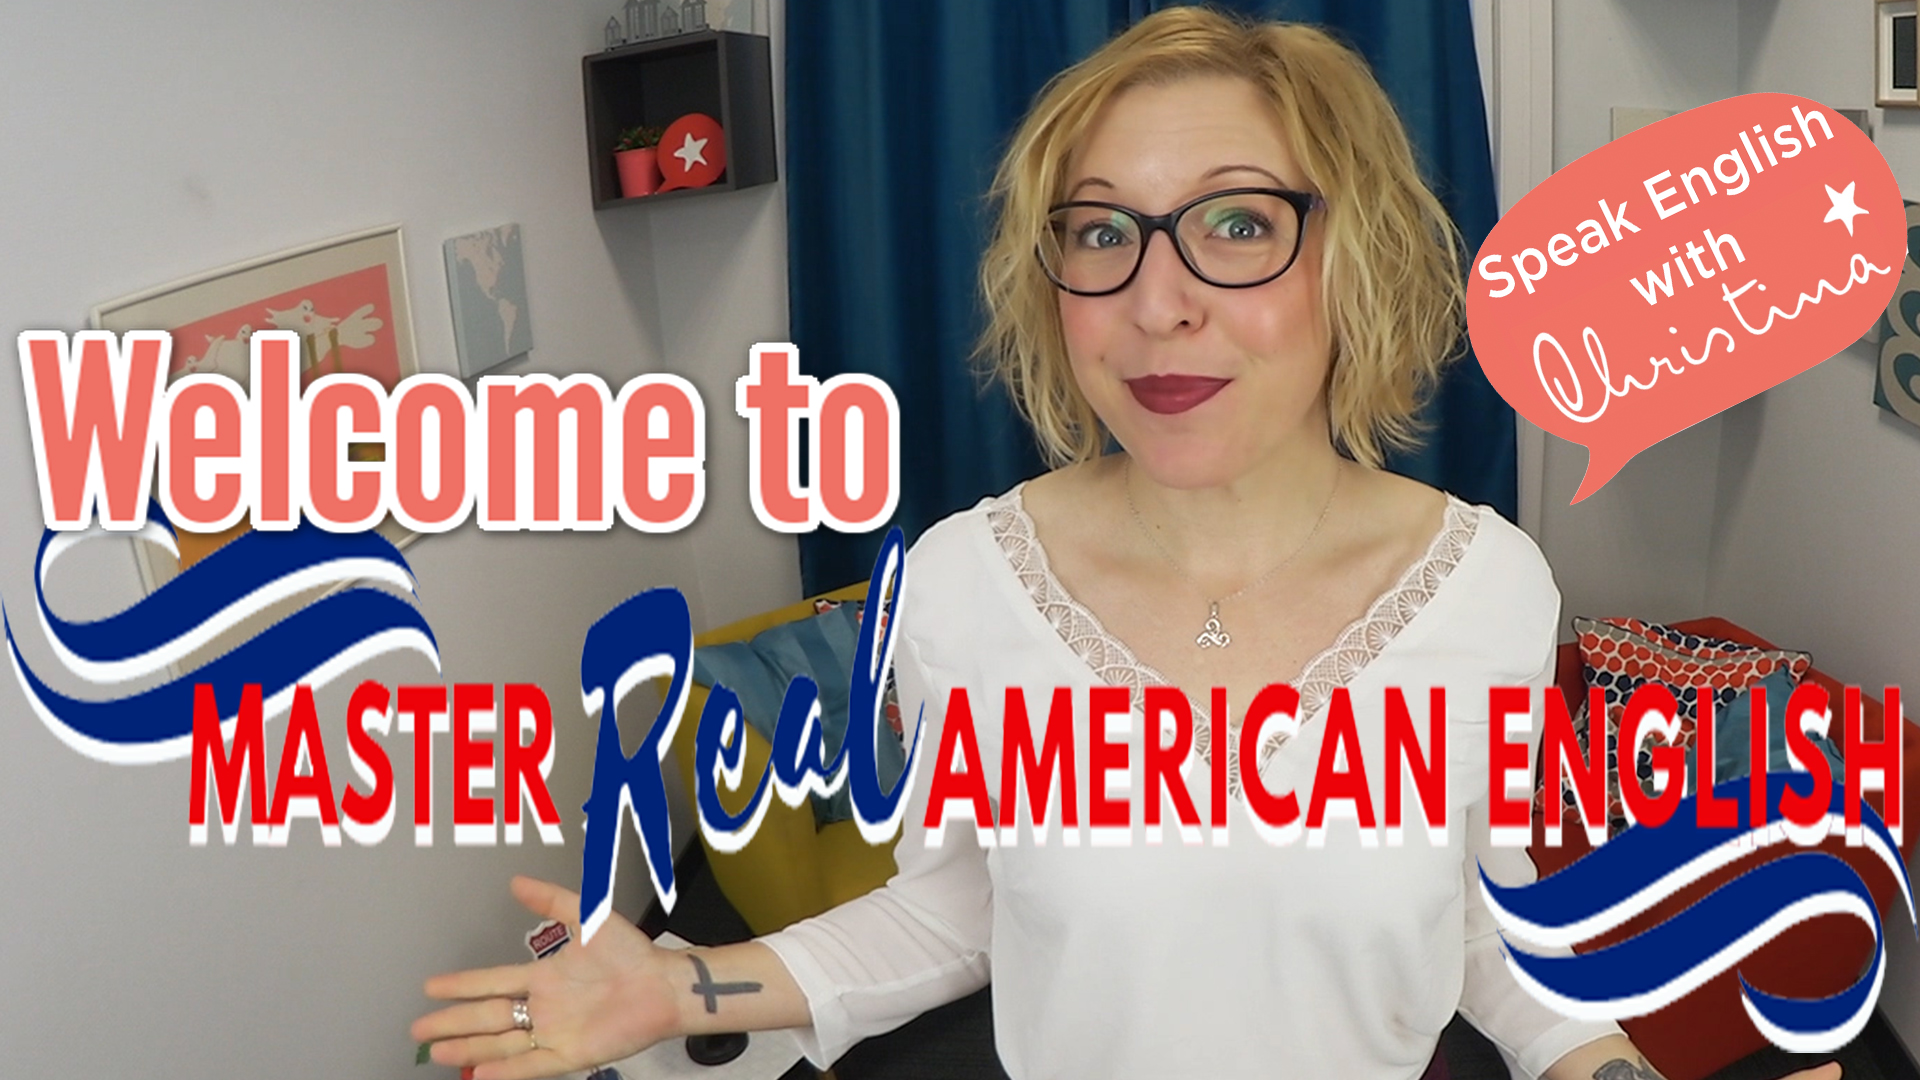 join Master Real American English